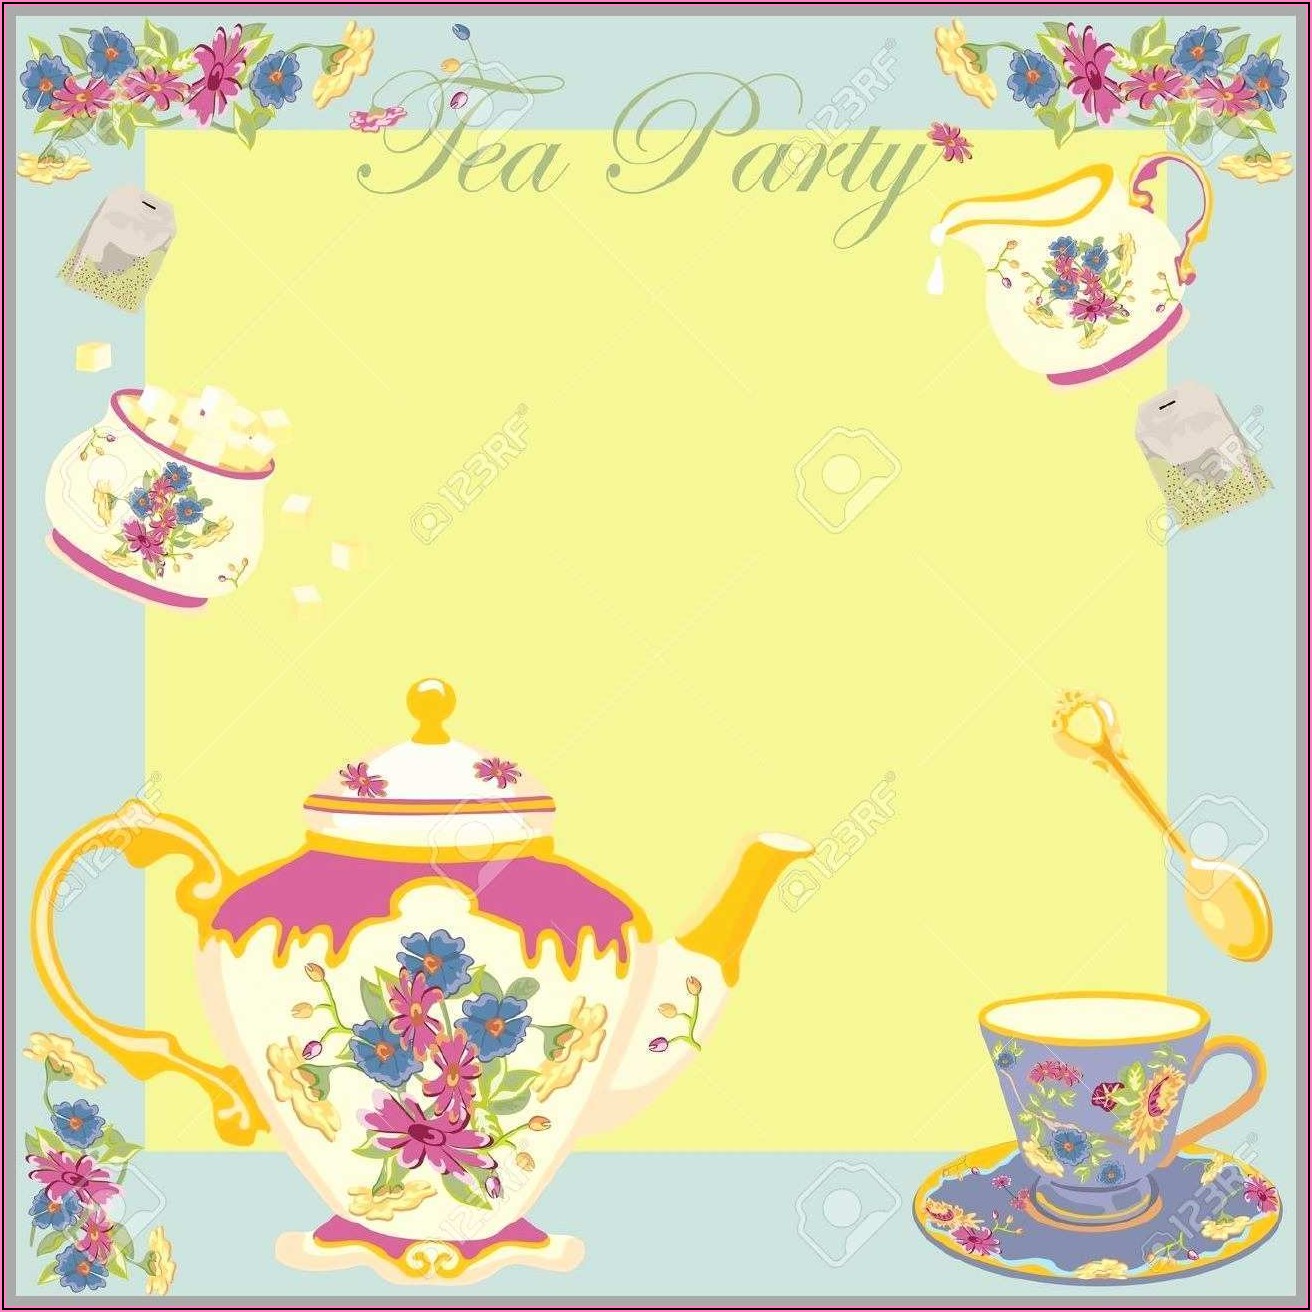 High Tea Invitation Template Blank